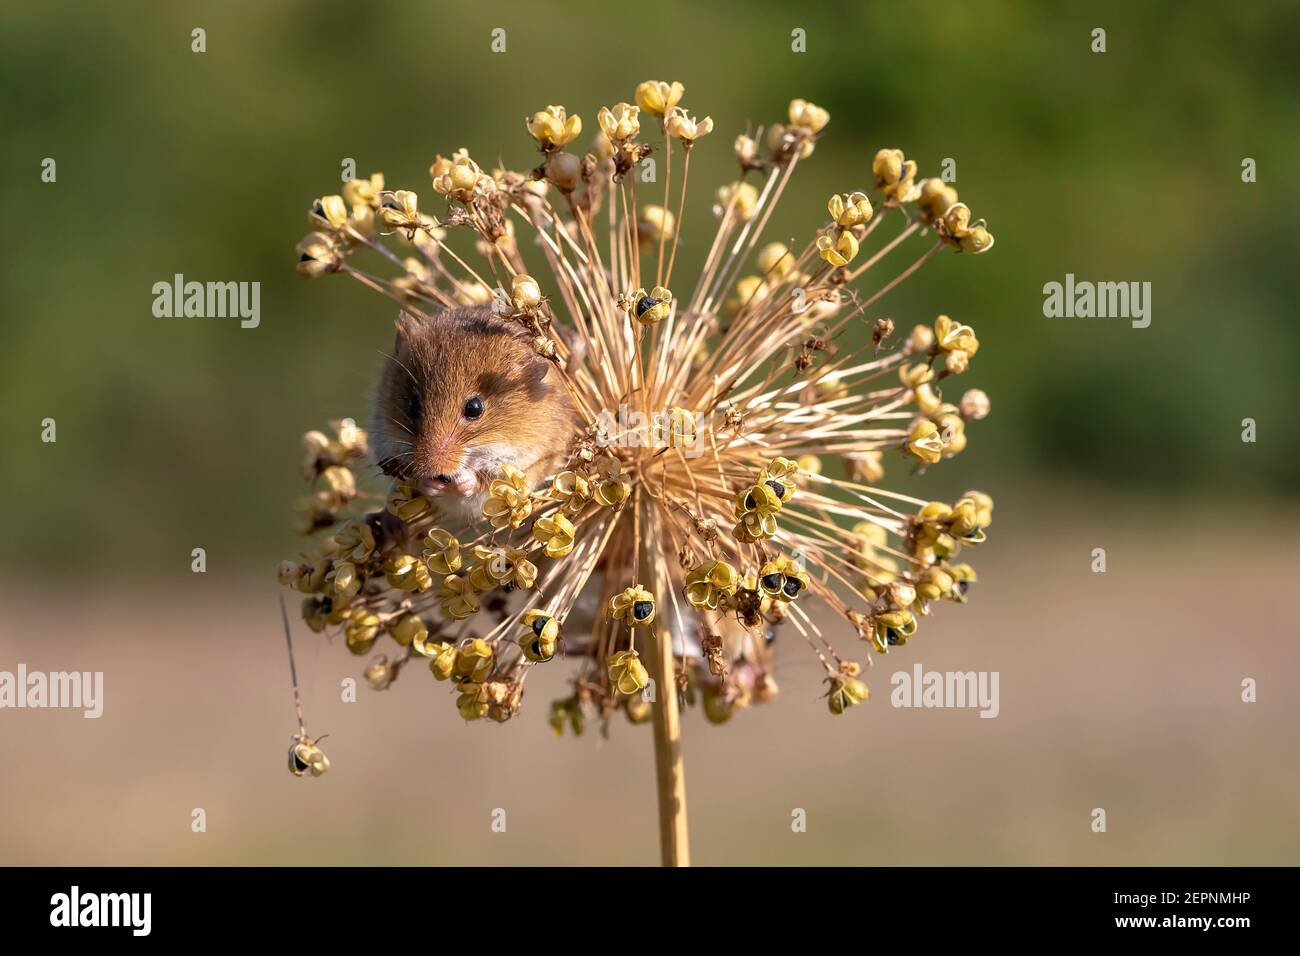 Harvest mouse (Micromys minutus) on an allium seed head, Holt, Dorset, UK Stock Photo